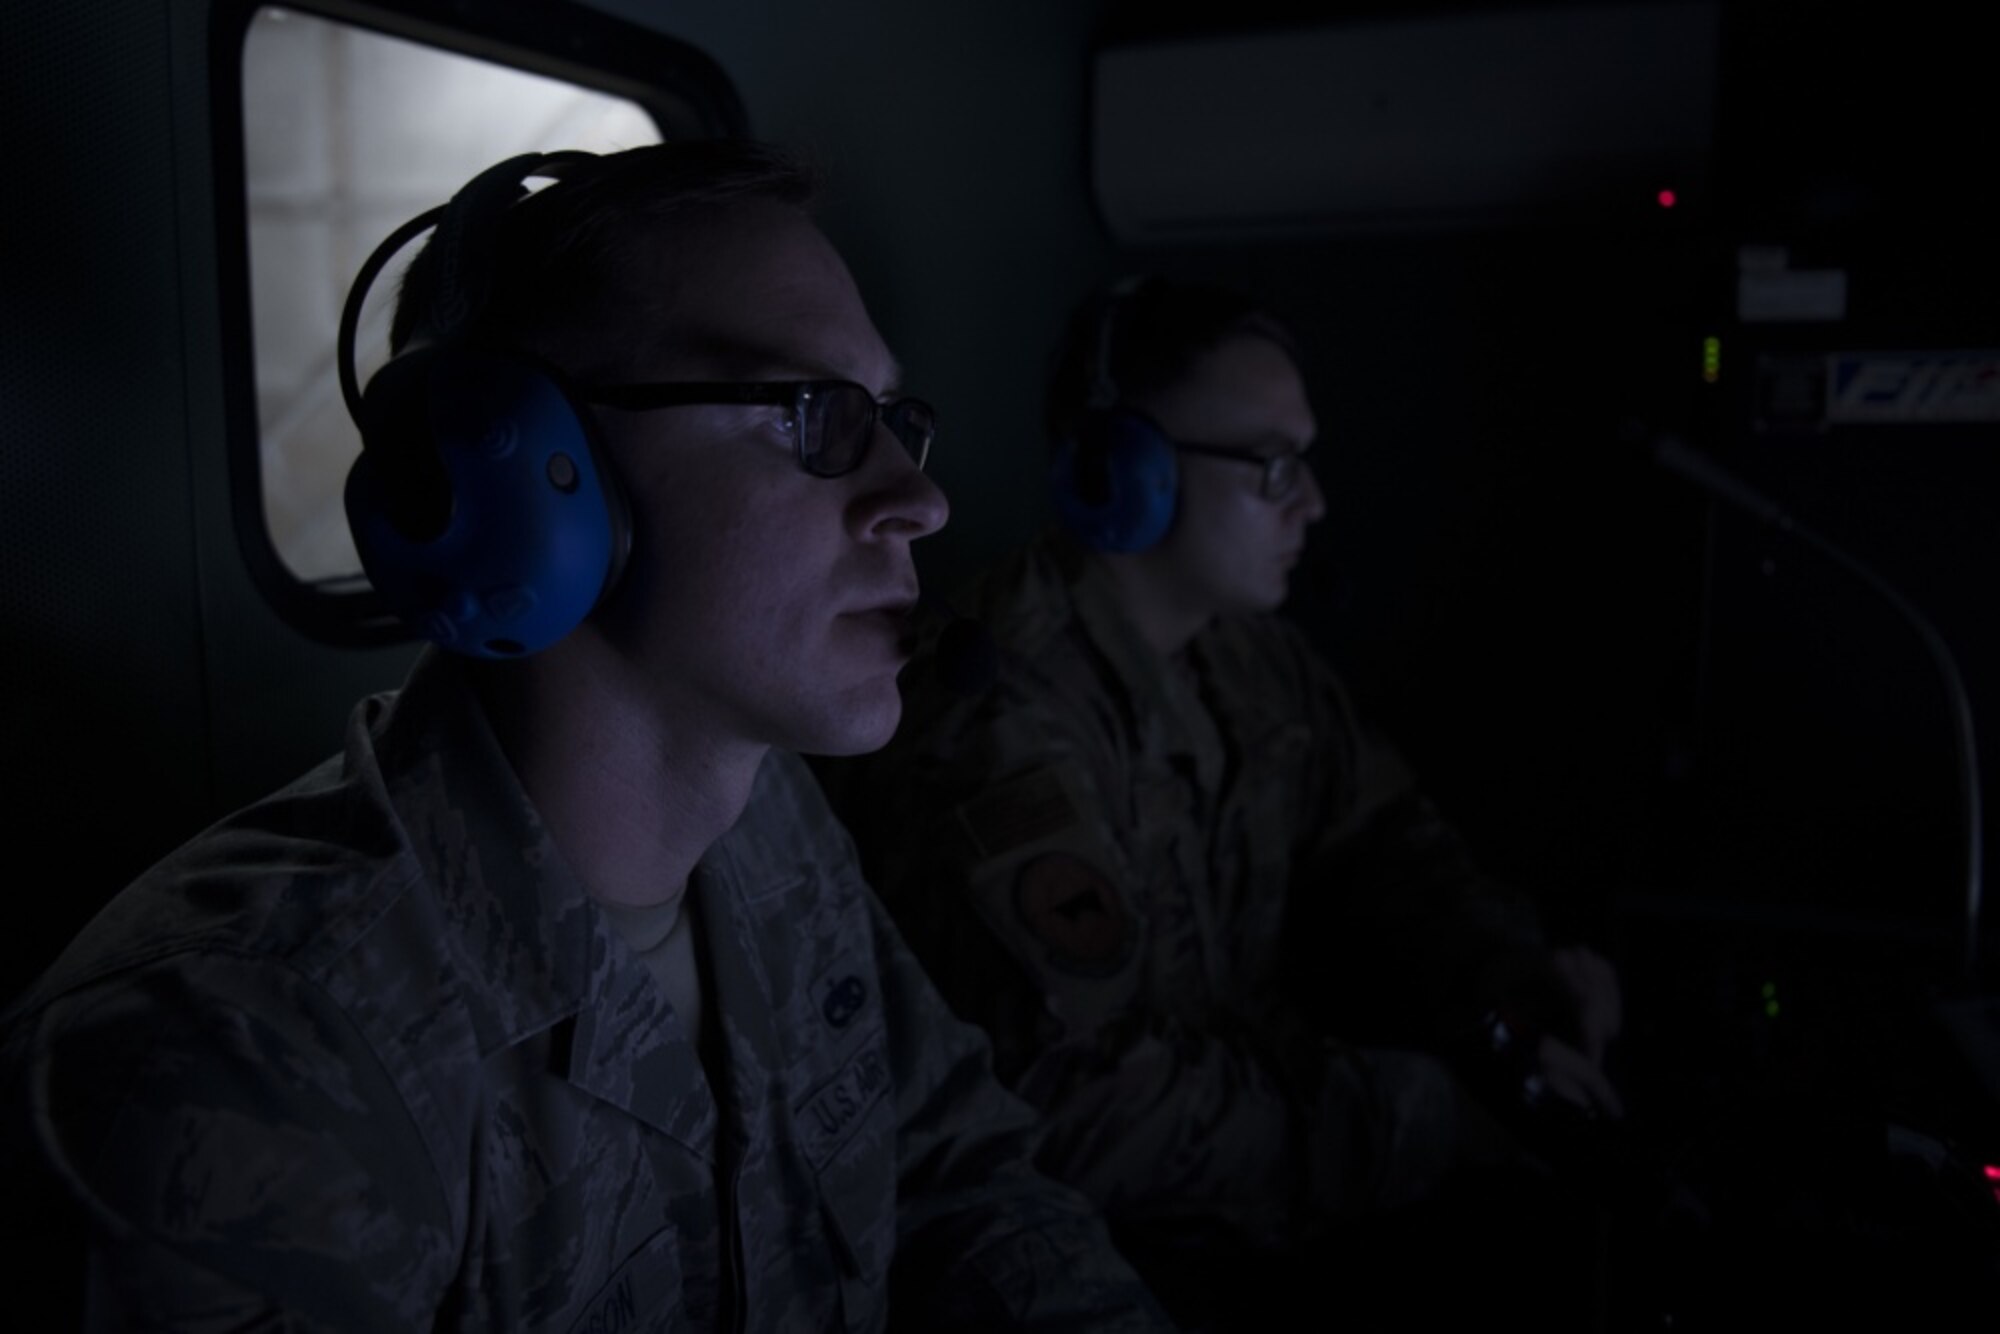 Two Airmen watch computer screens in a dark room